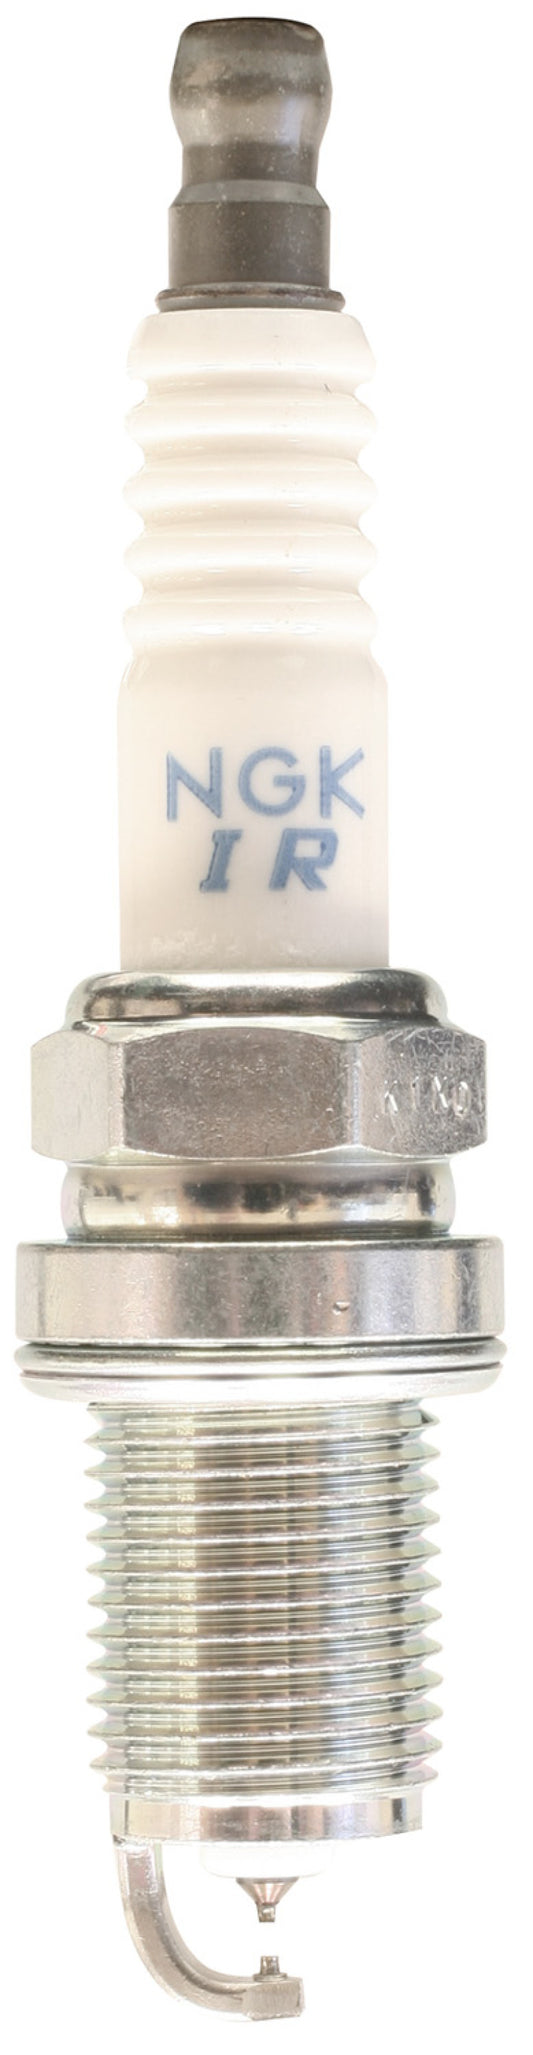 NGK Iridium Stock Spark Plug Box of 4 (DIFR6C11)